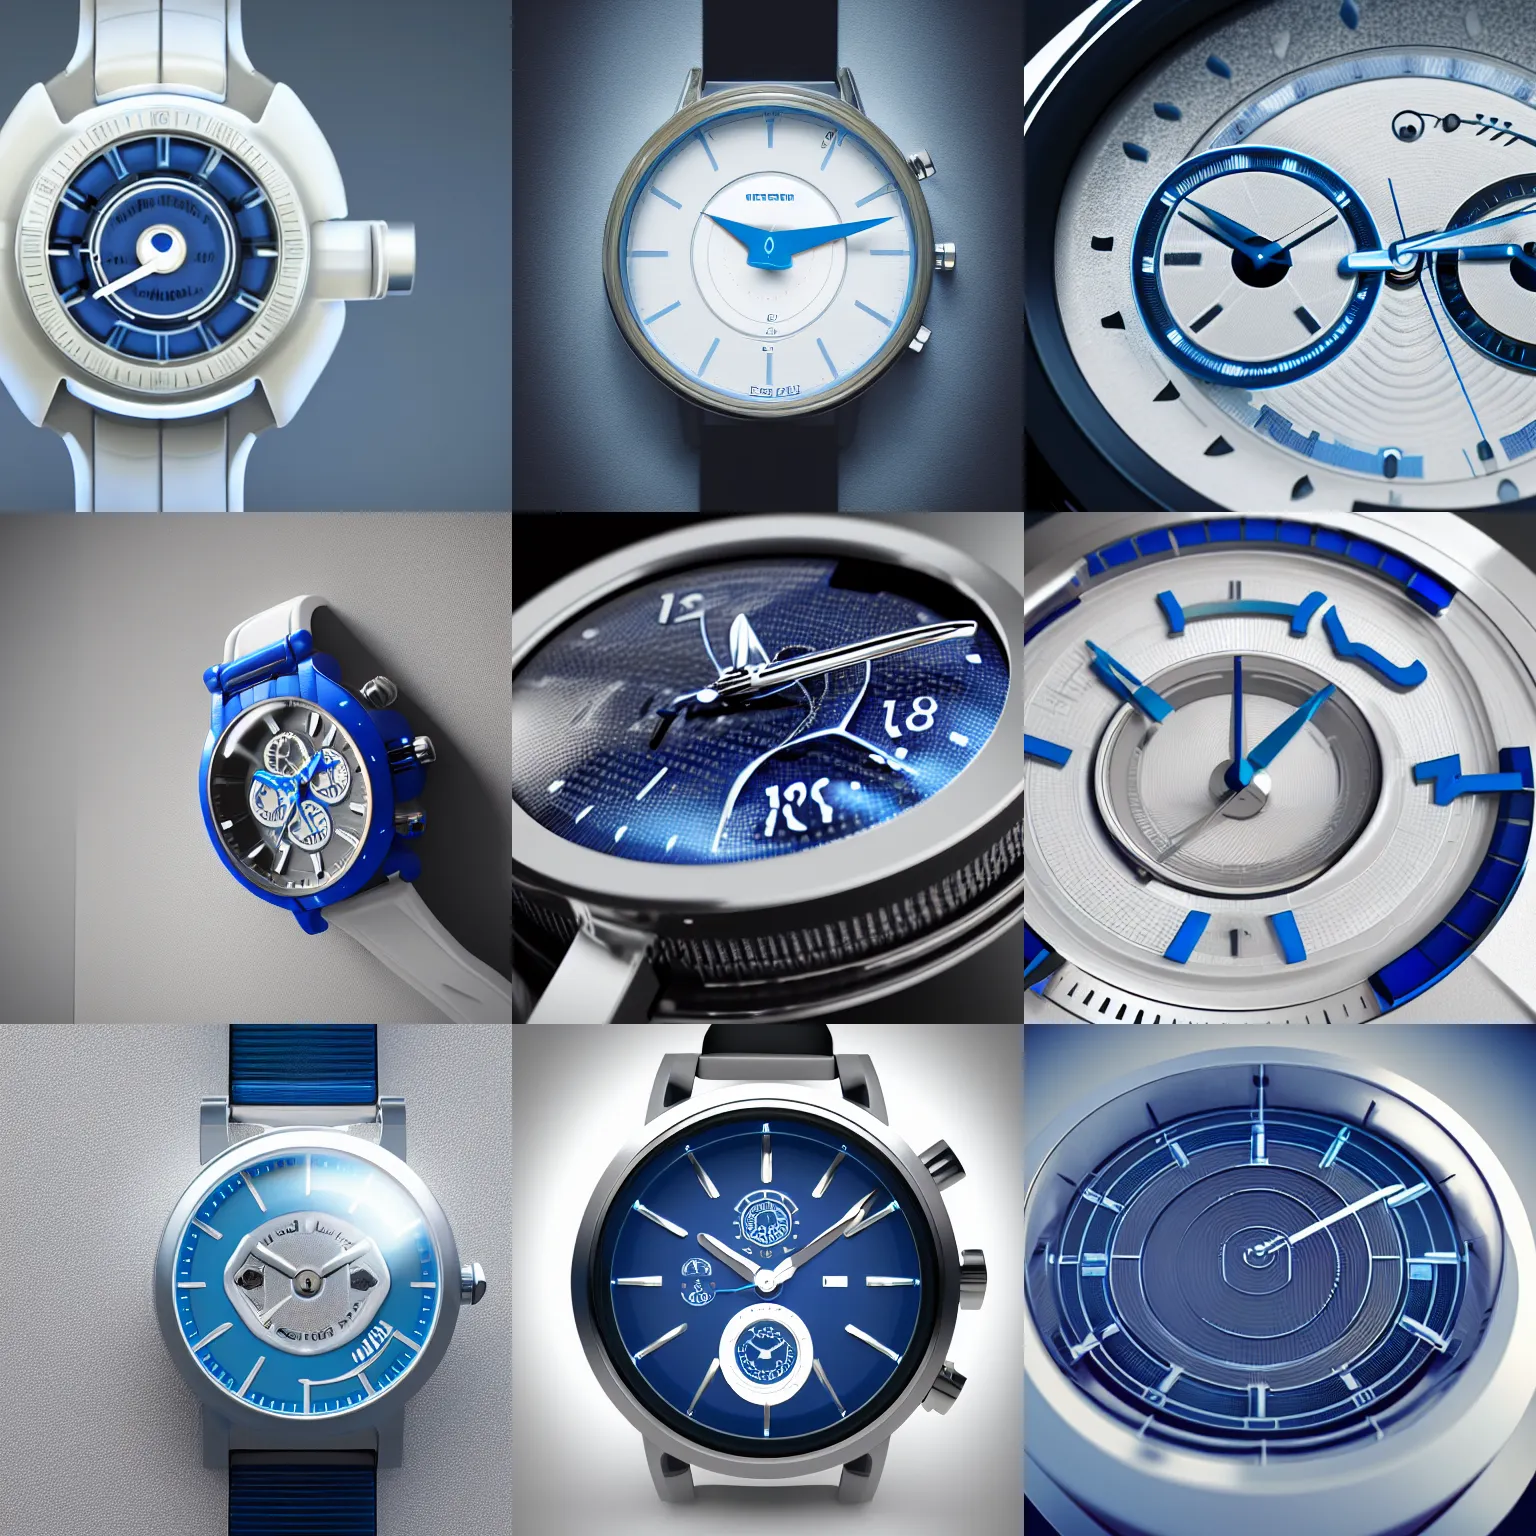 Futuristic watch stock photo. Image of ethnicity, icon - 38698640